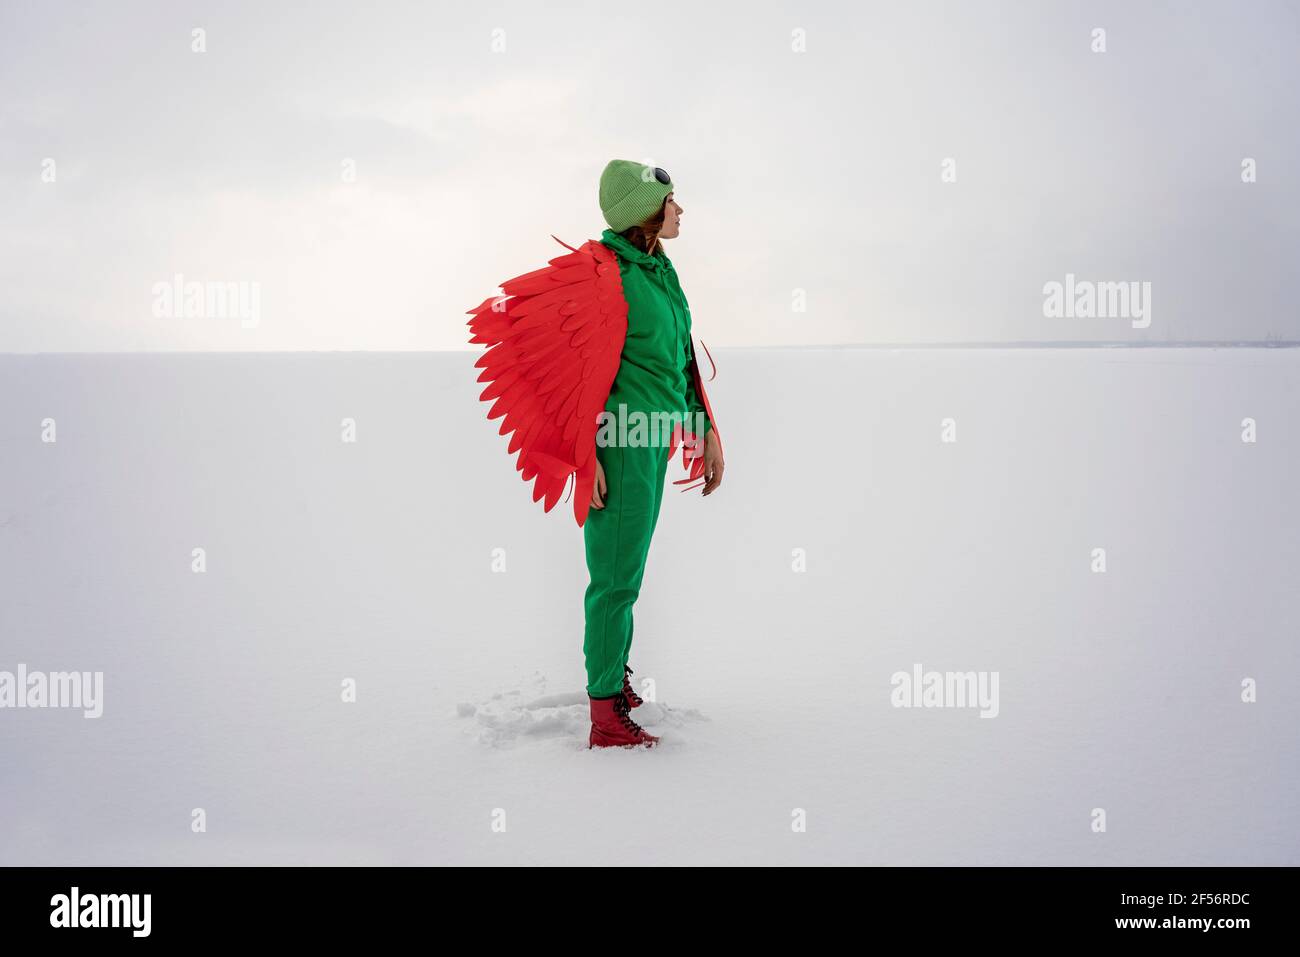 Woman in green bird costume on snow Stock Photo